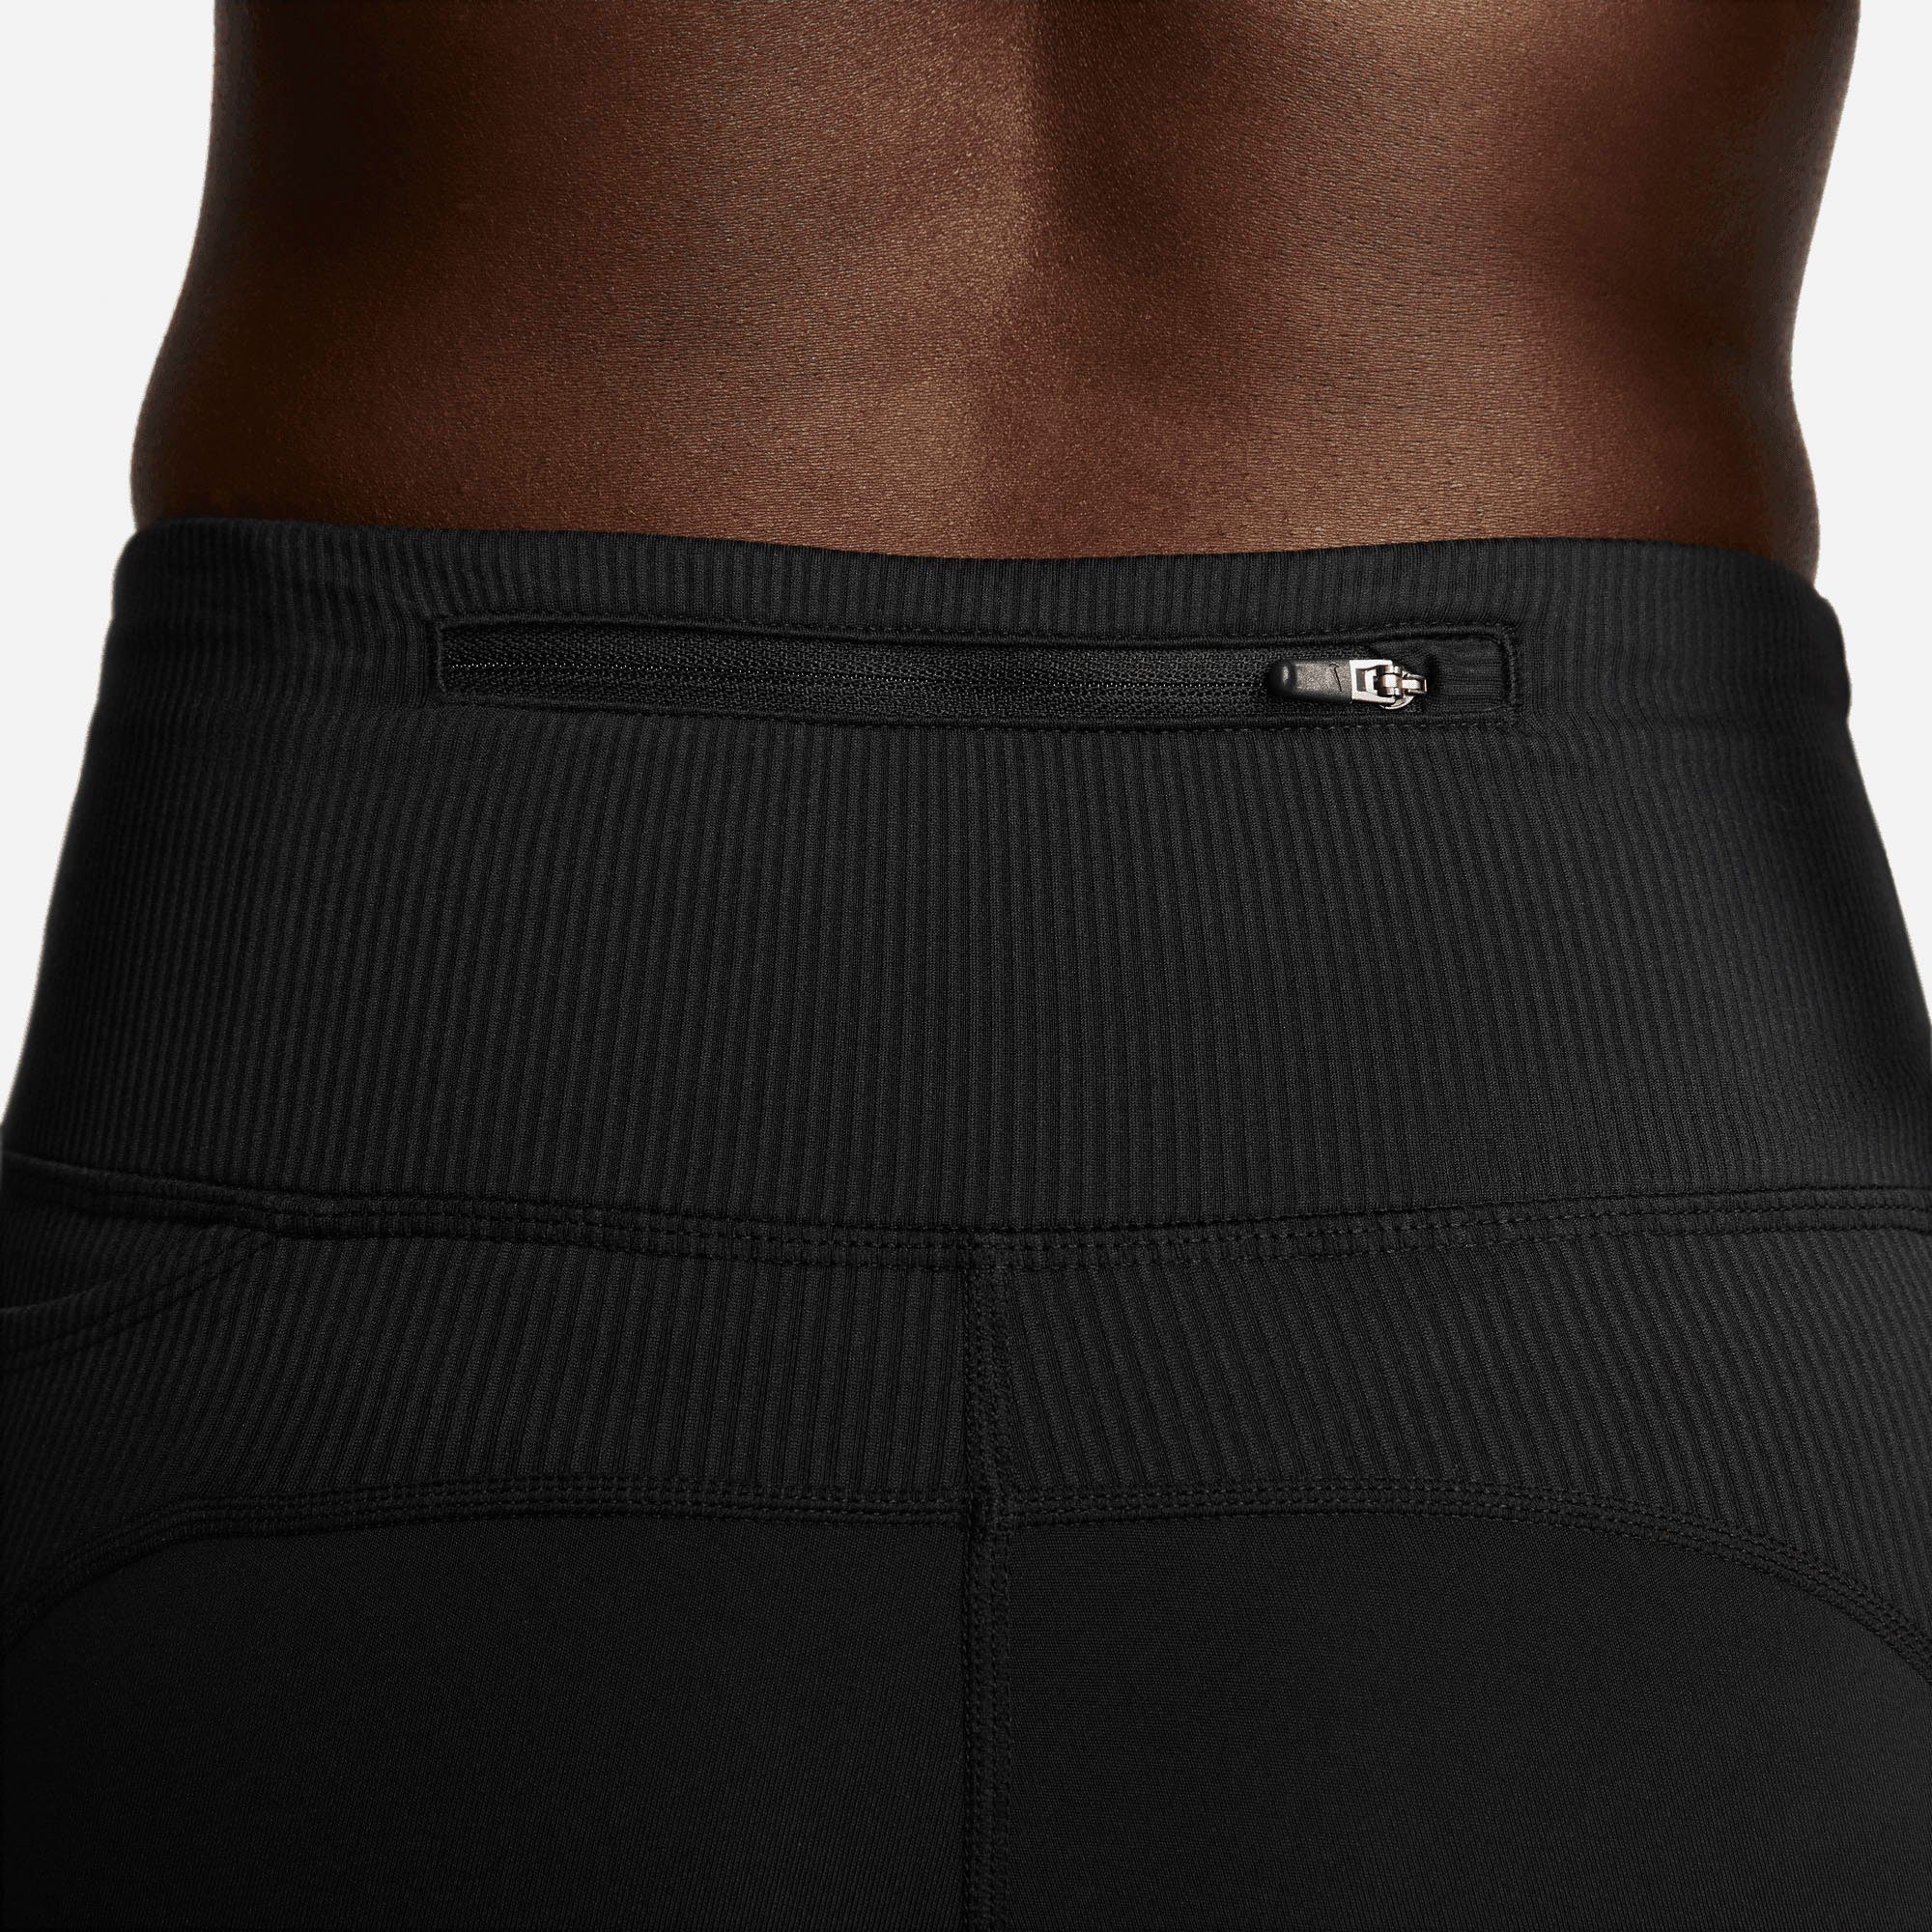 Nike Shorts Dri-FIT Lauftights Women's schwarz